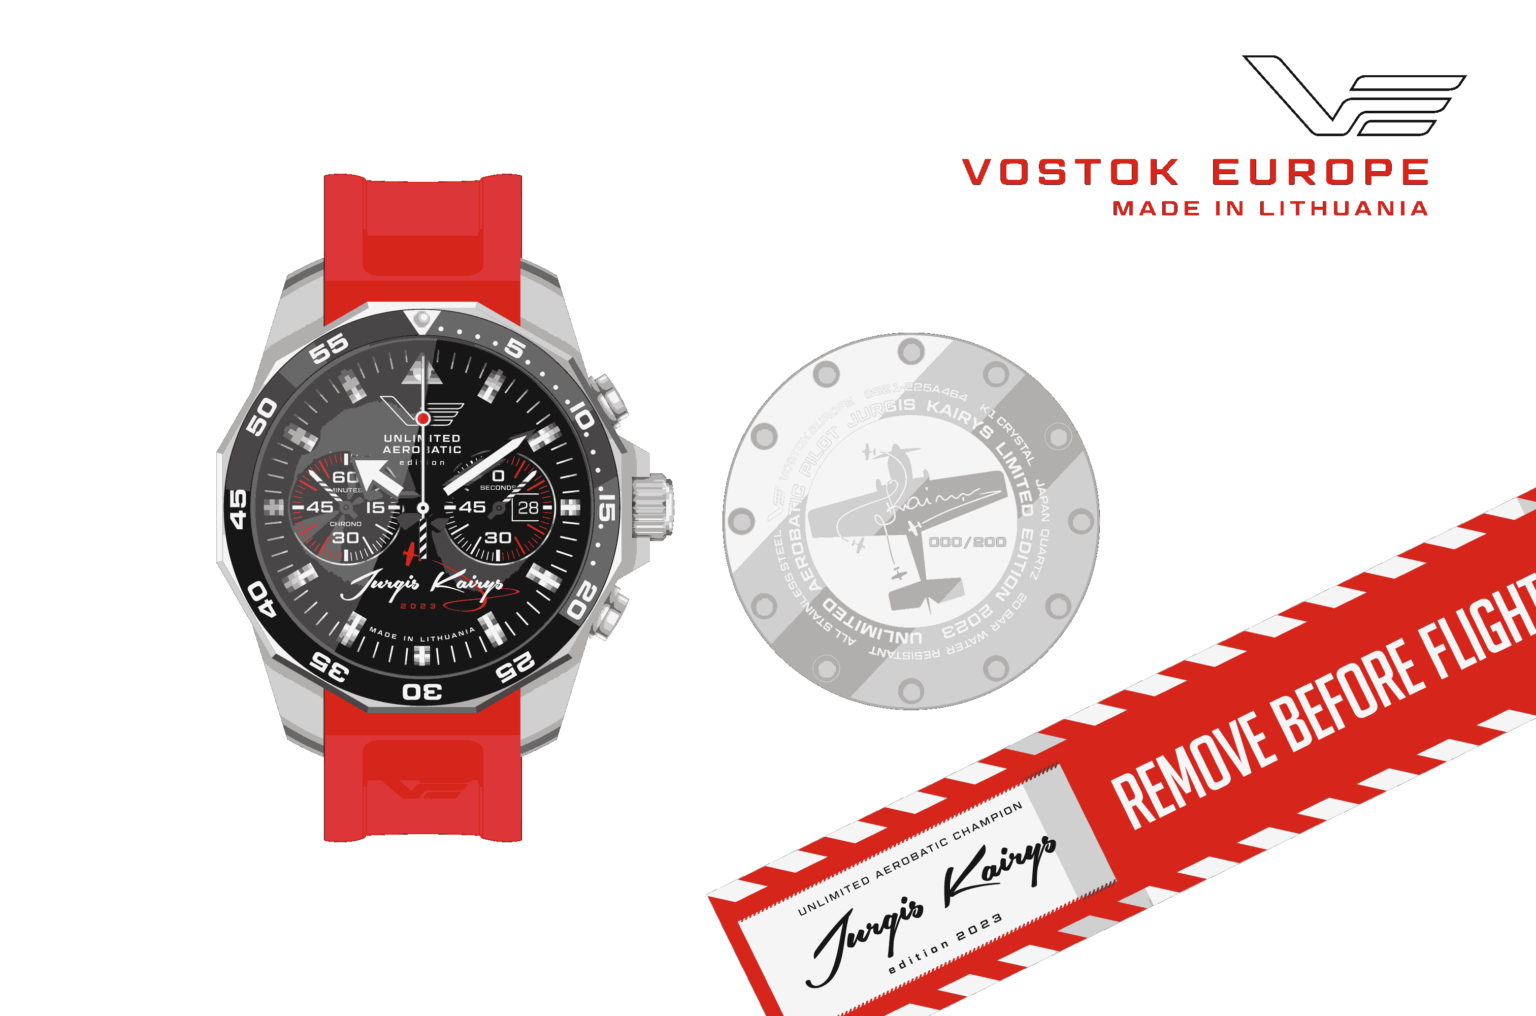 Vostok Europe 6S21-225A464 Jurgis Kairys Limited Edition